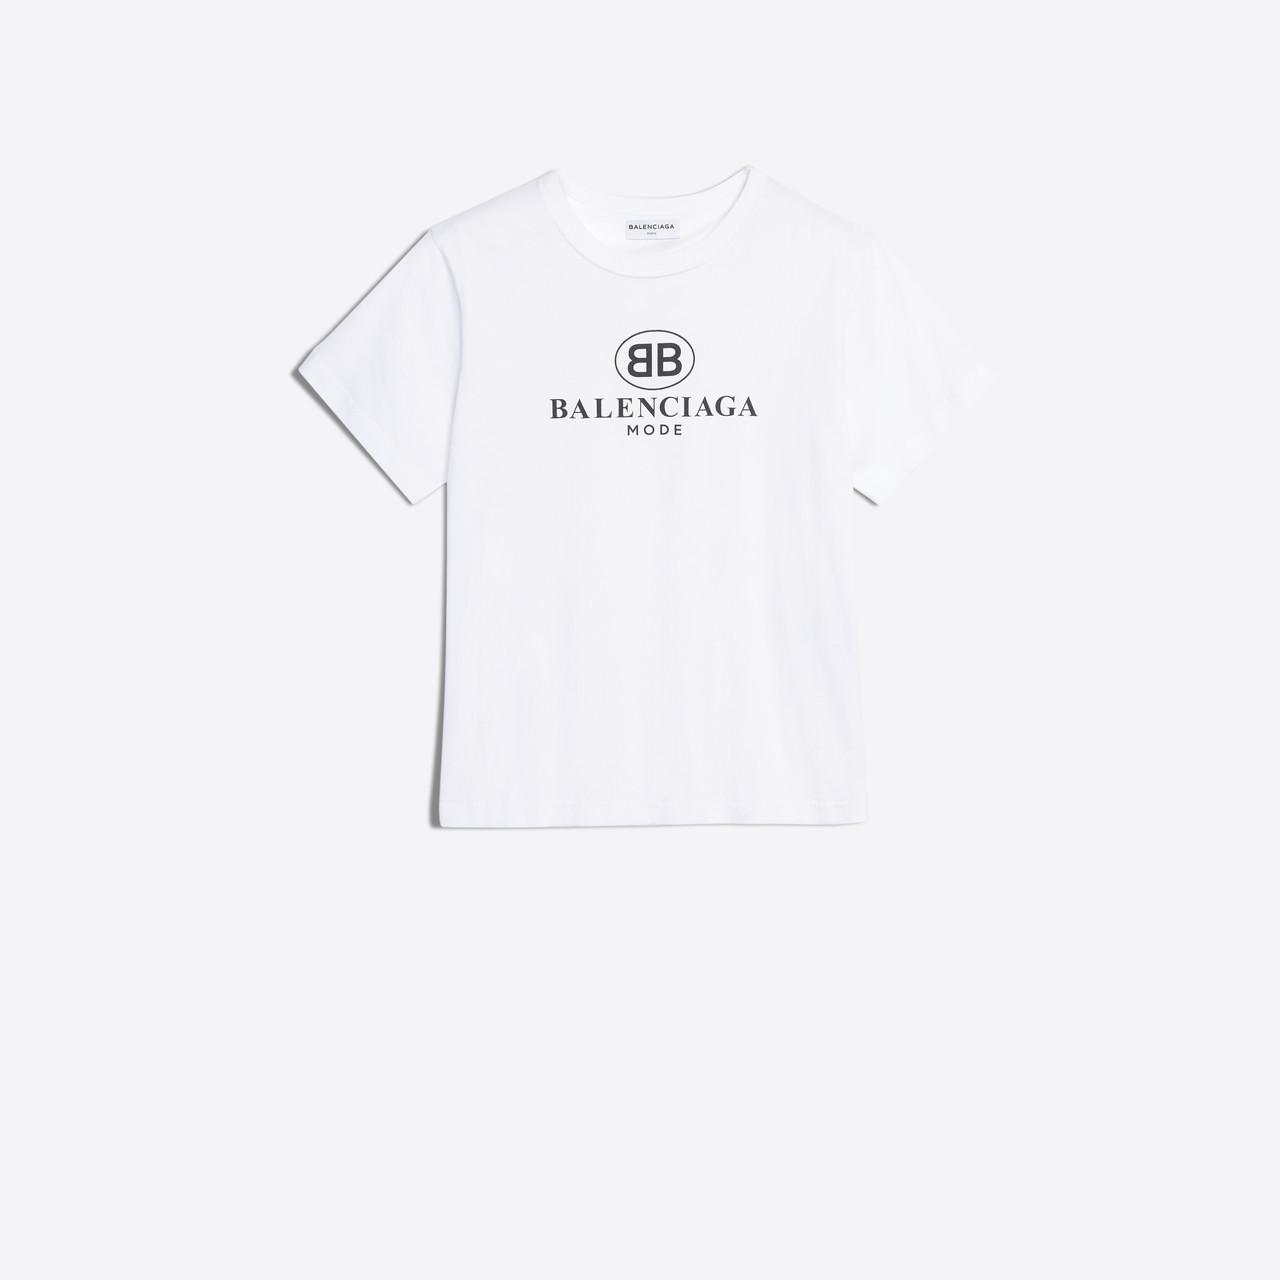 Balenciaga Cotton Bb Mode T-shirt in White for Men - Lyst